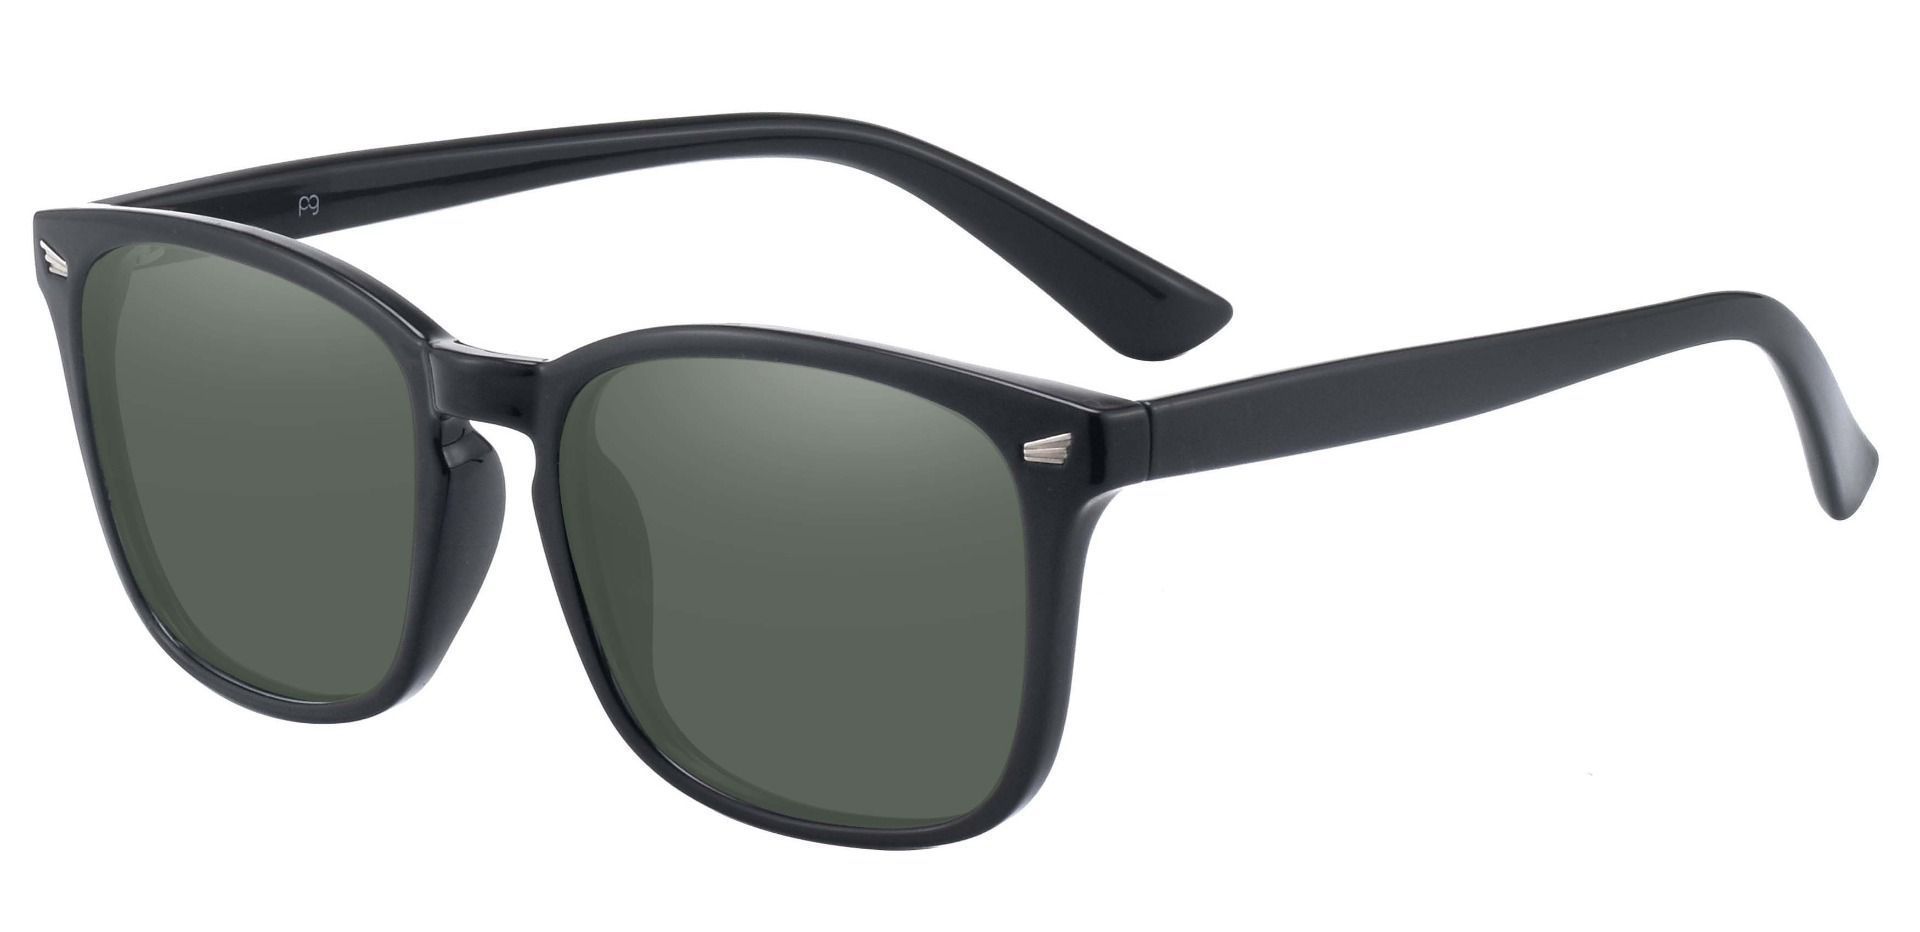 Rogan Square Prescription Sunglasses - Black Frame With Green Lenses